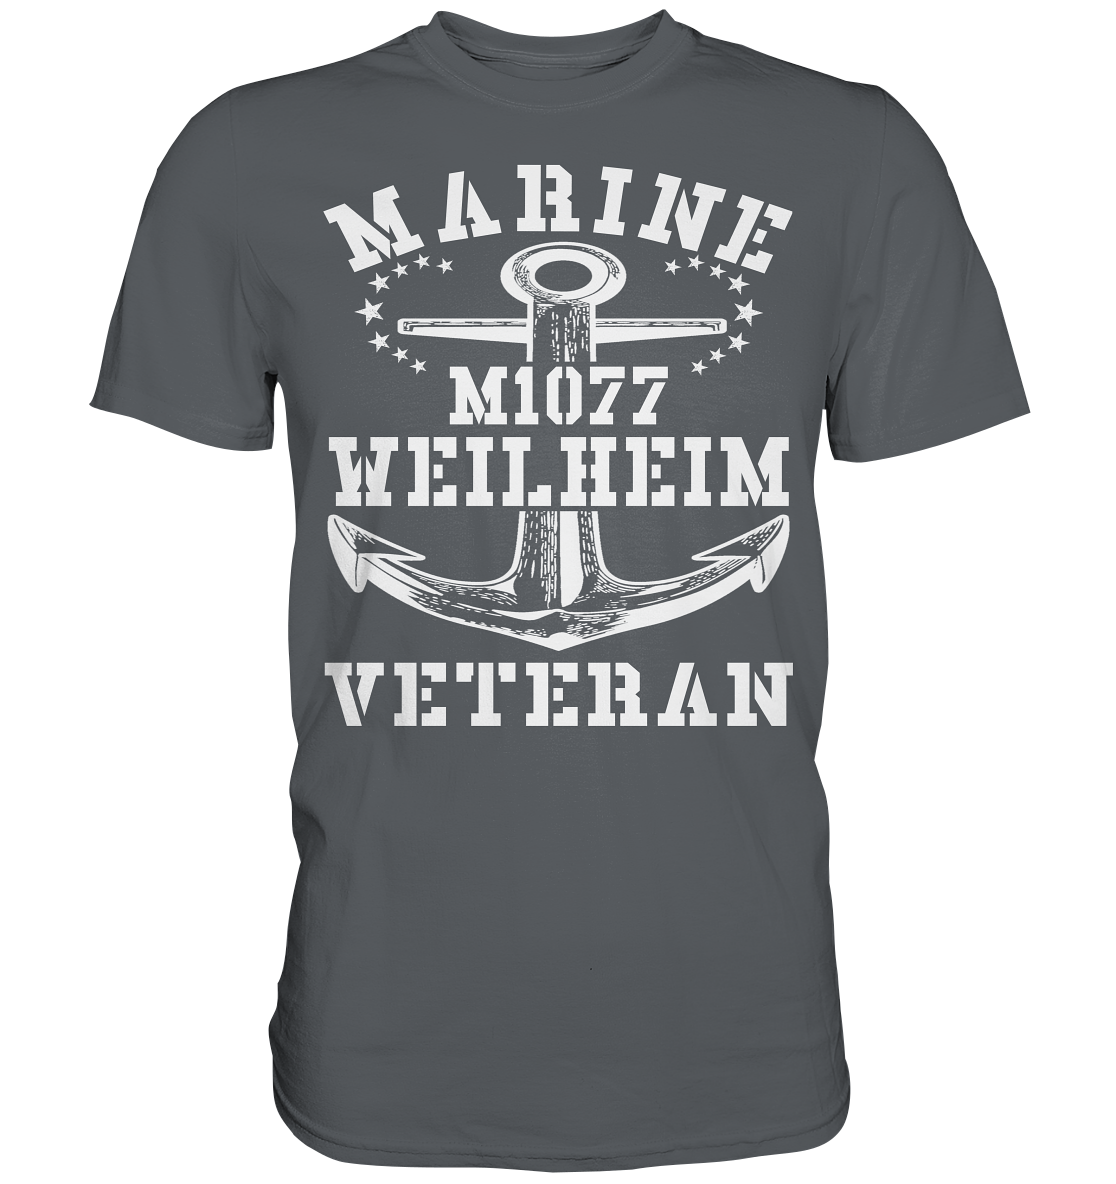 MARINE VETERAN M1077 WEILHEIM - Premium Shirt